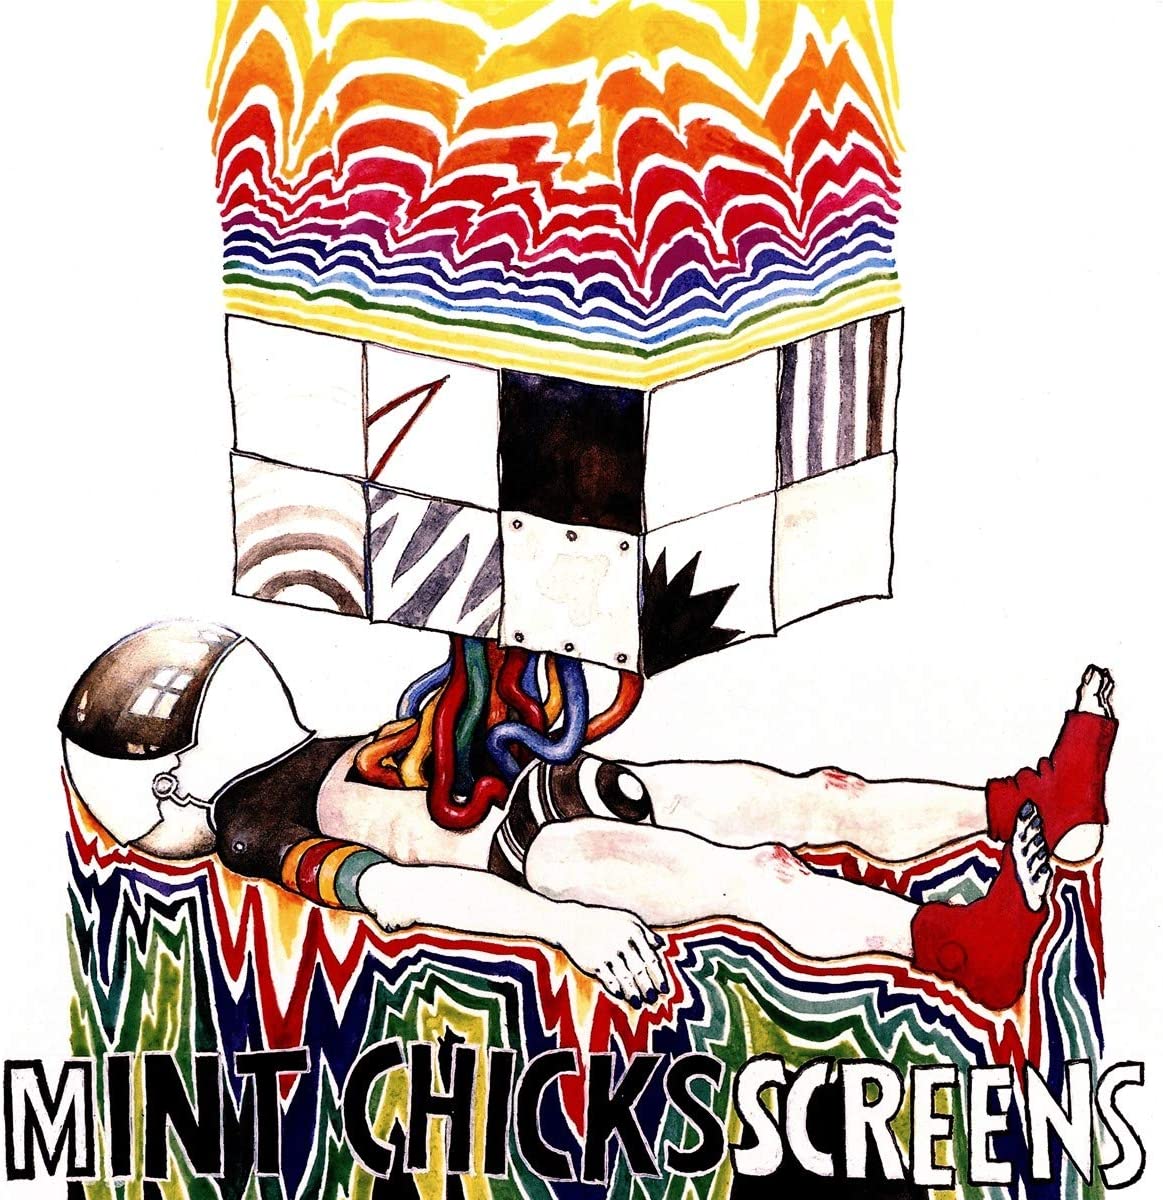 Mint Chicks/Screens - 10th Anniversary [LP]